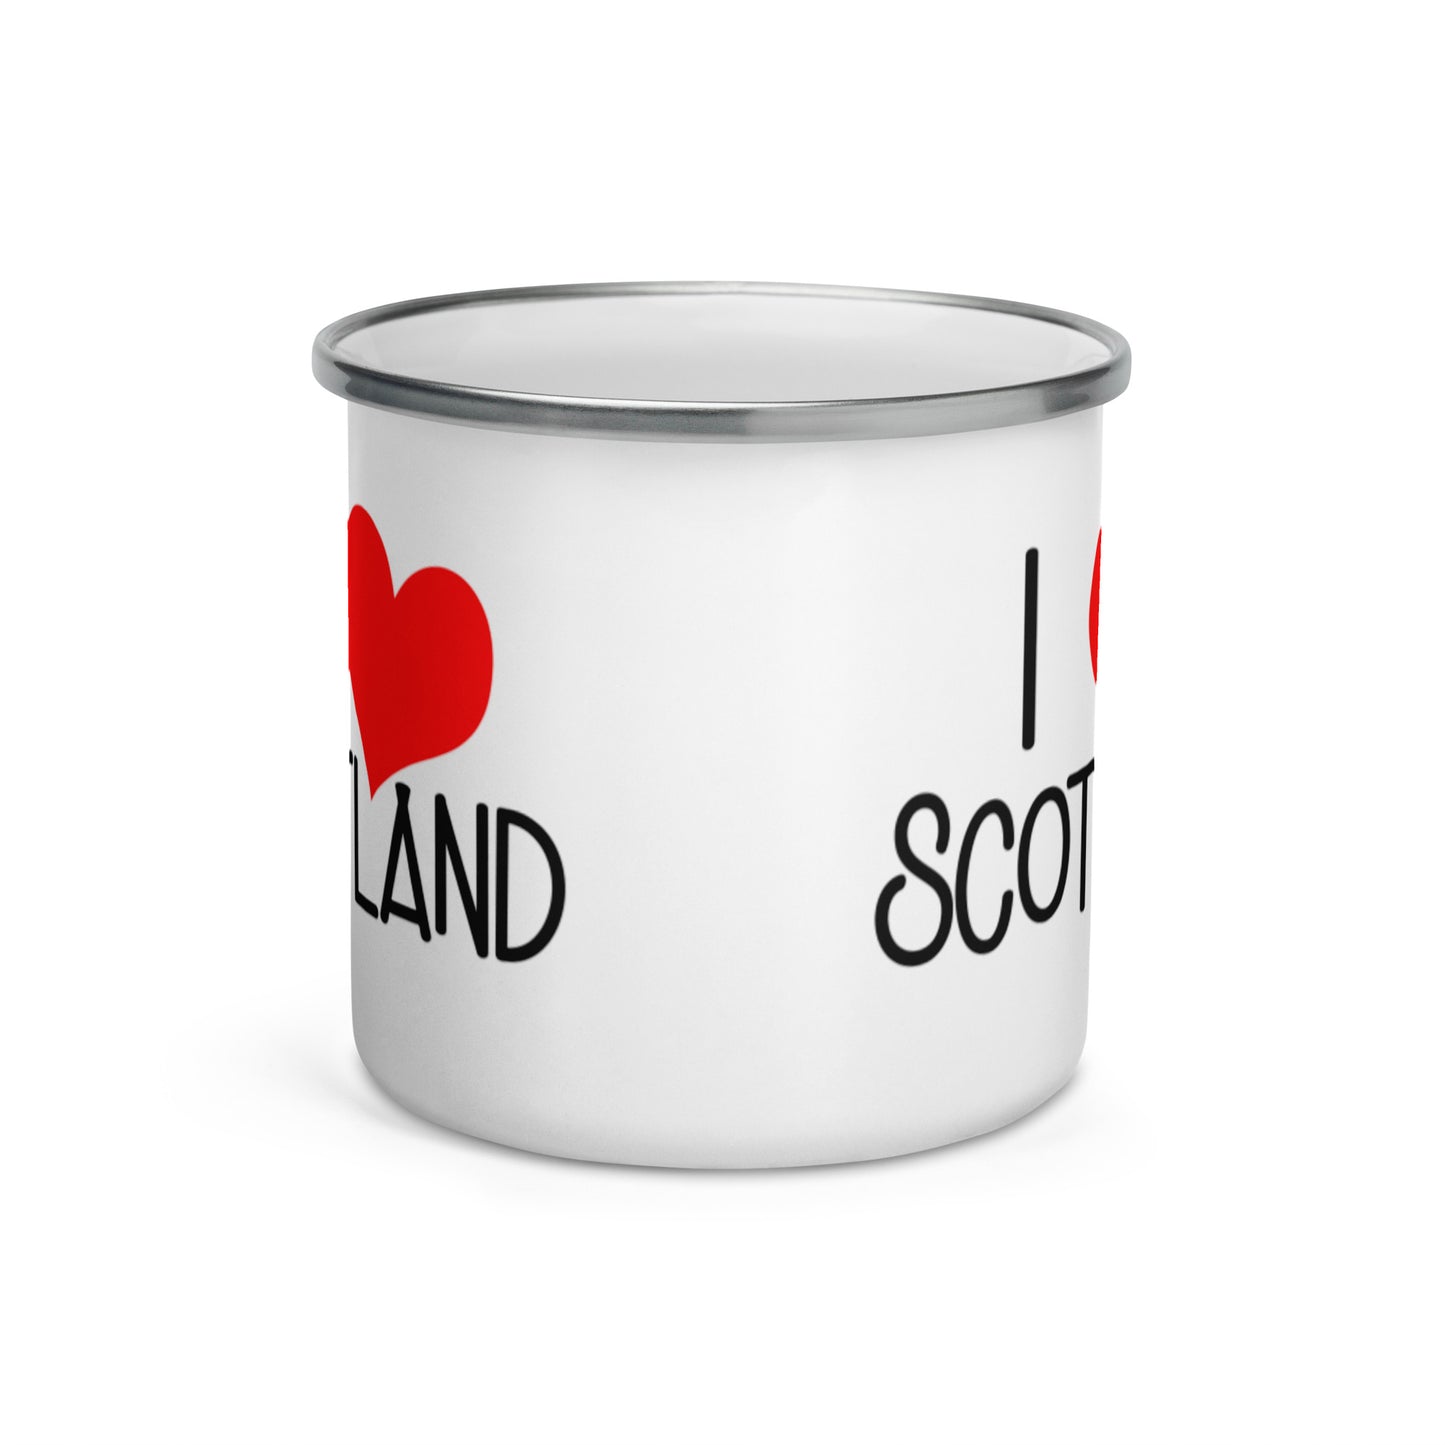 'I love Scotland' Enamel Mug